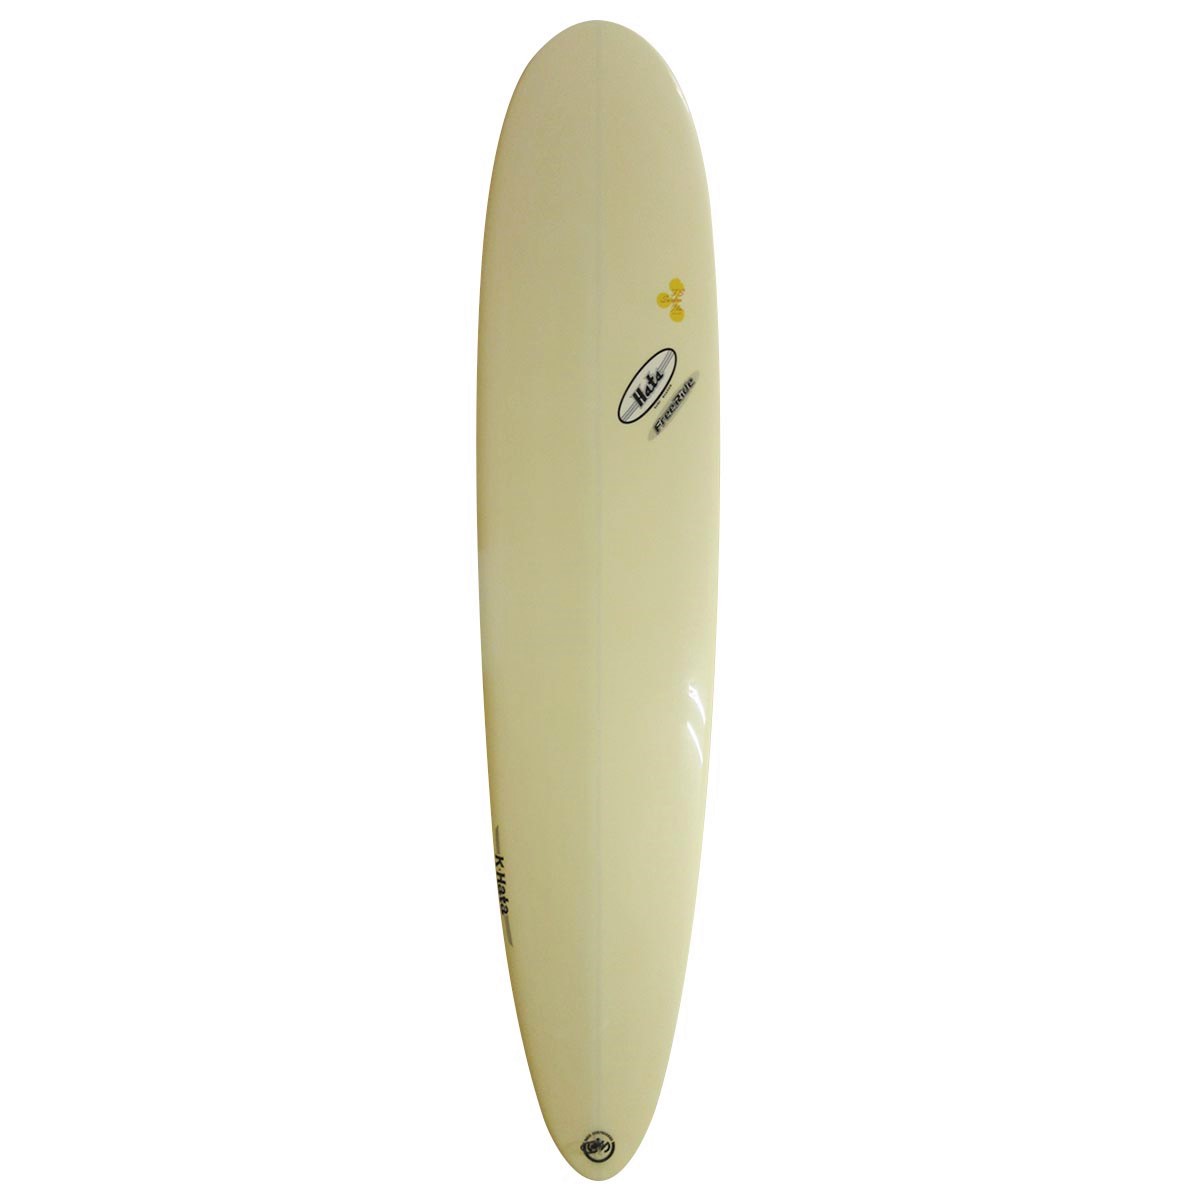 HATA SURFBOARDS / HATA SURFBOARDS / 9`1 Custom shaped by Kunio Hata